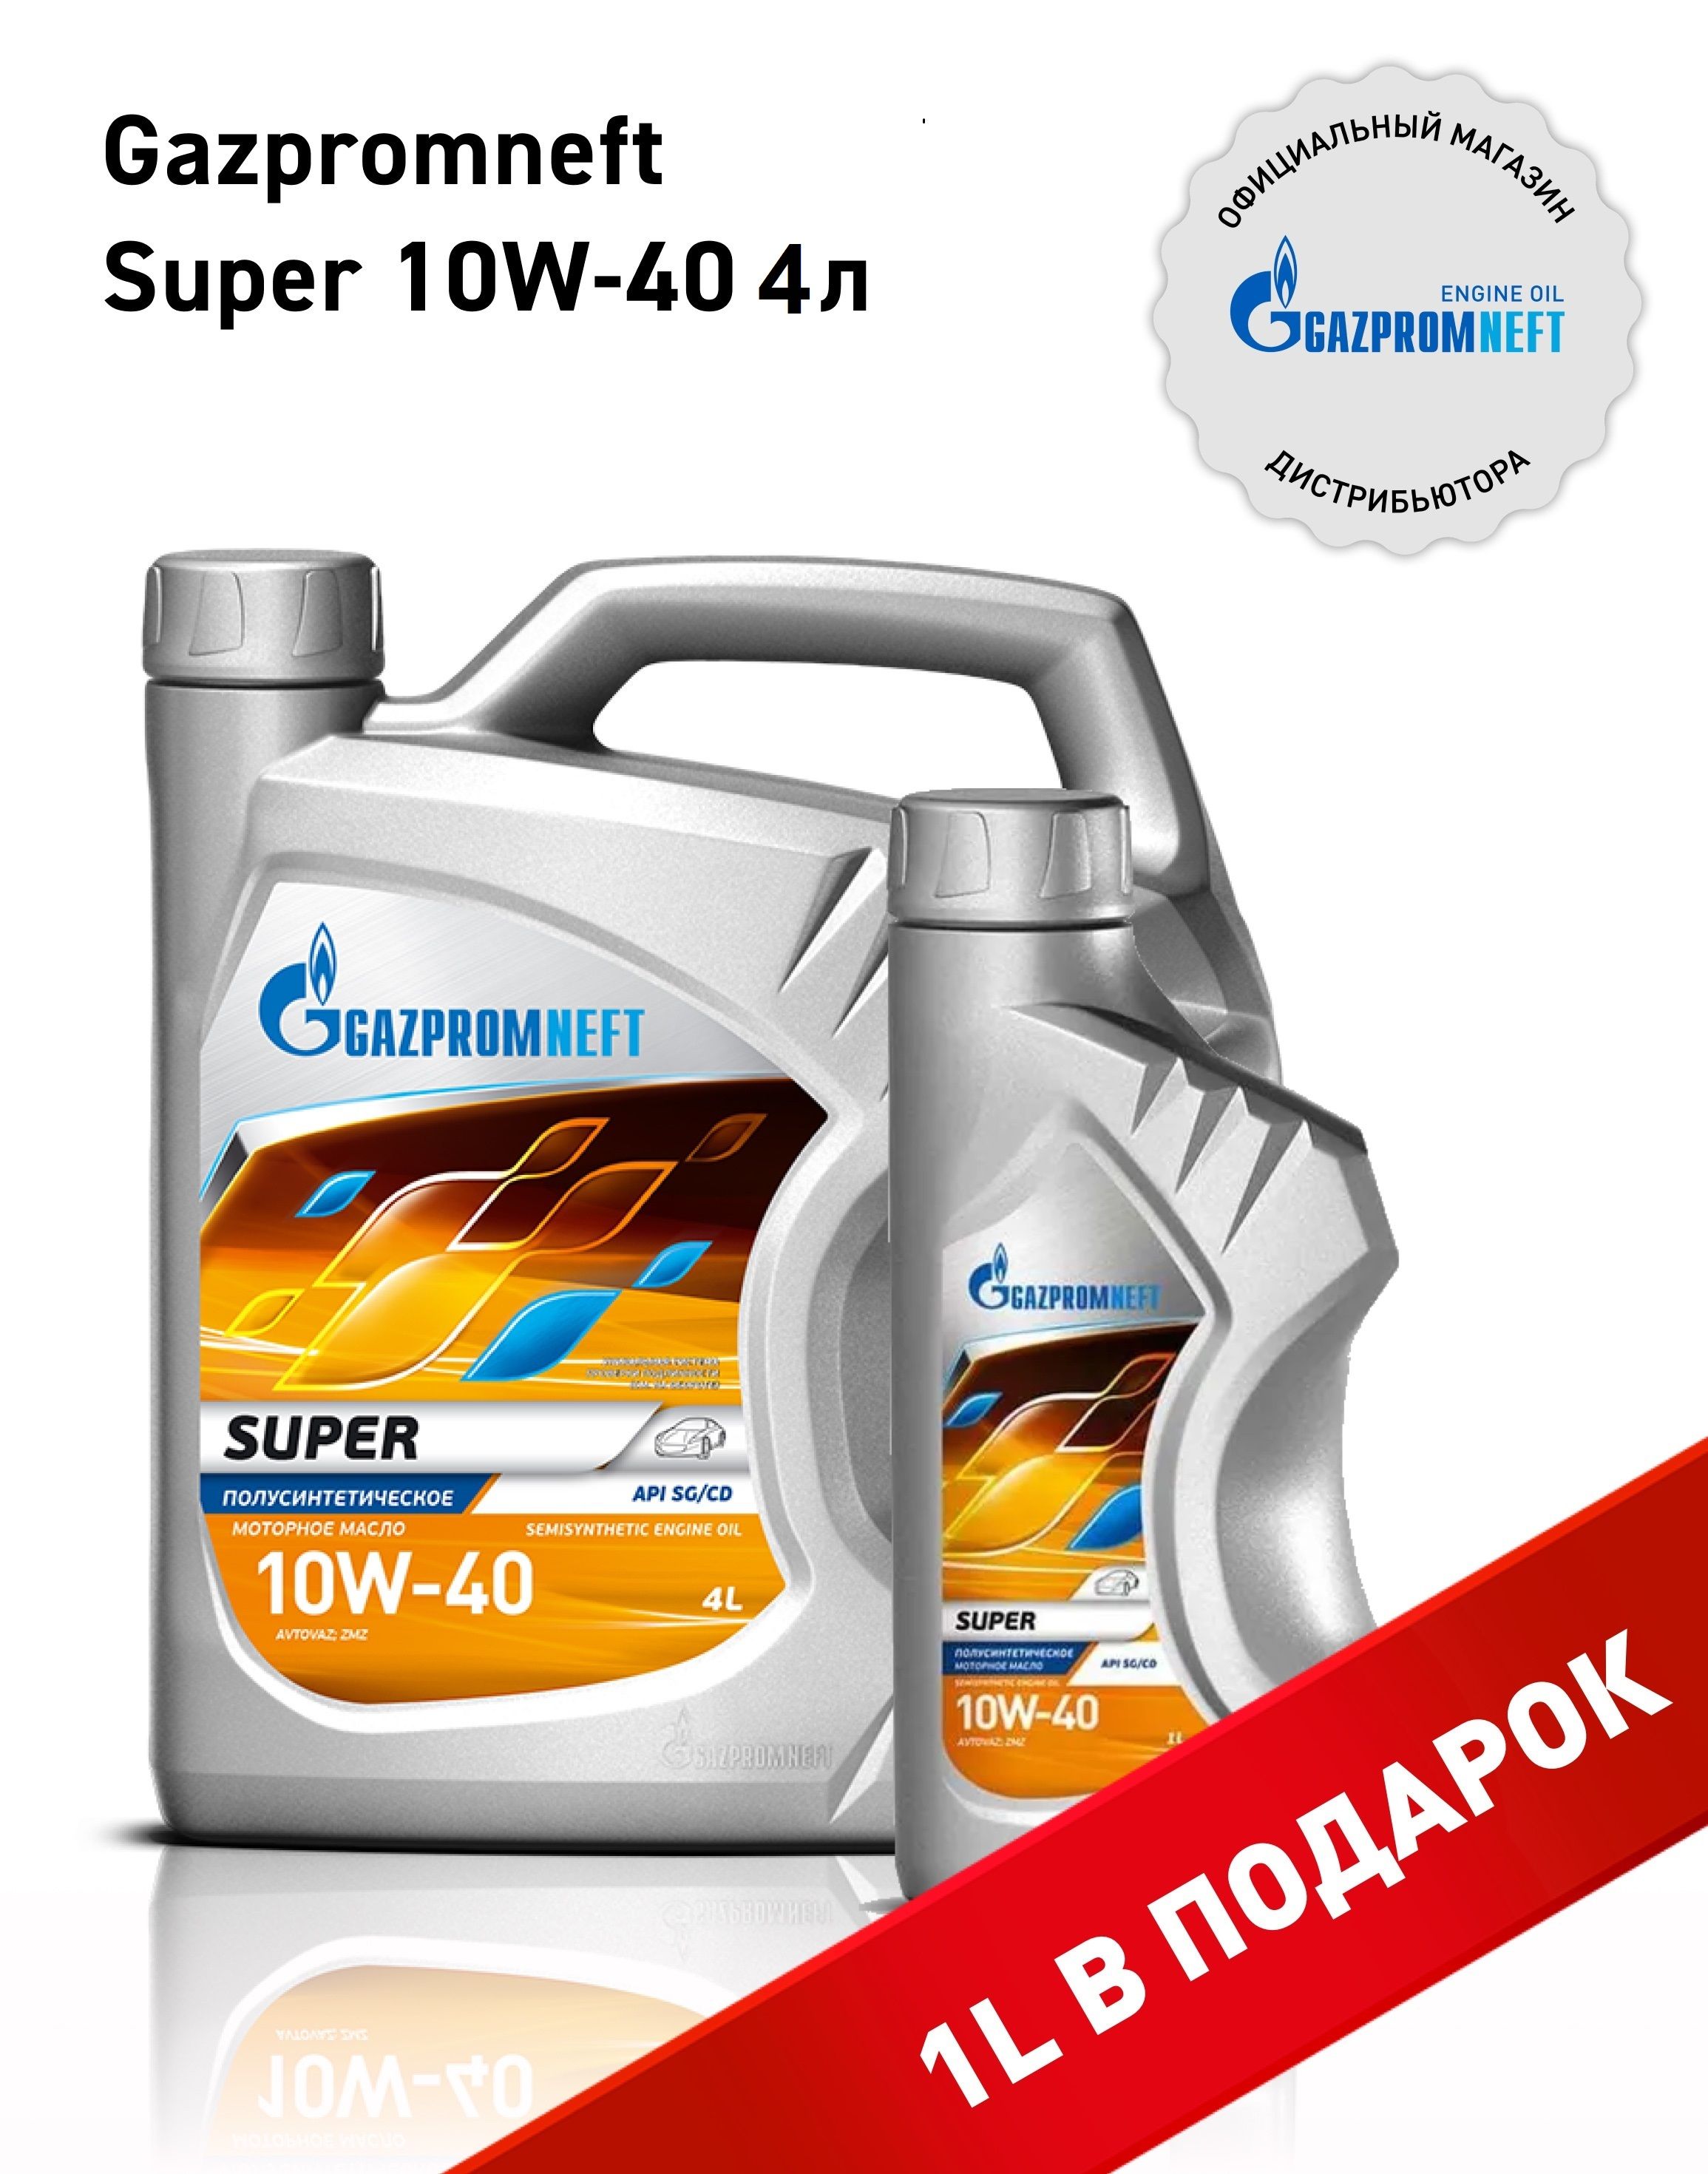 GazpromneftSuper10W-40,Масломоторное,Полусинтетическое,5л